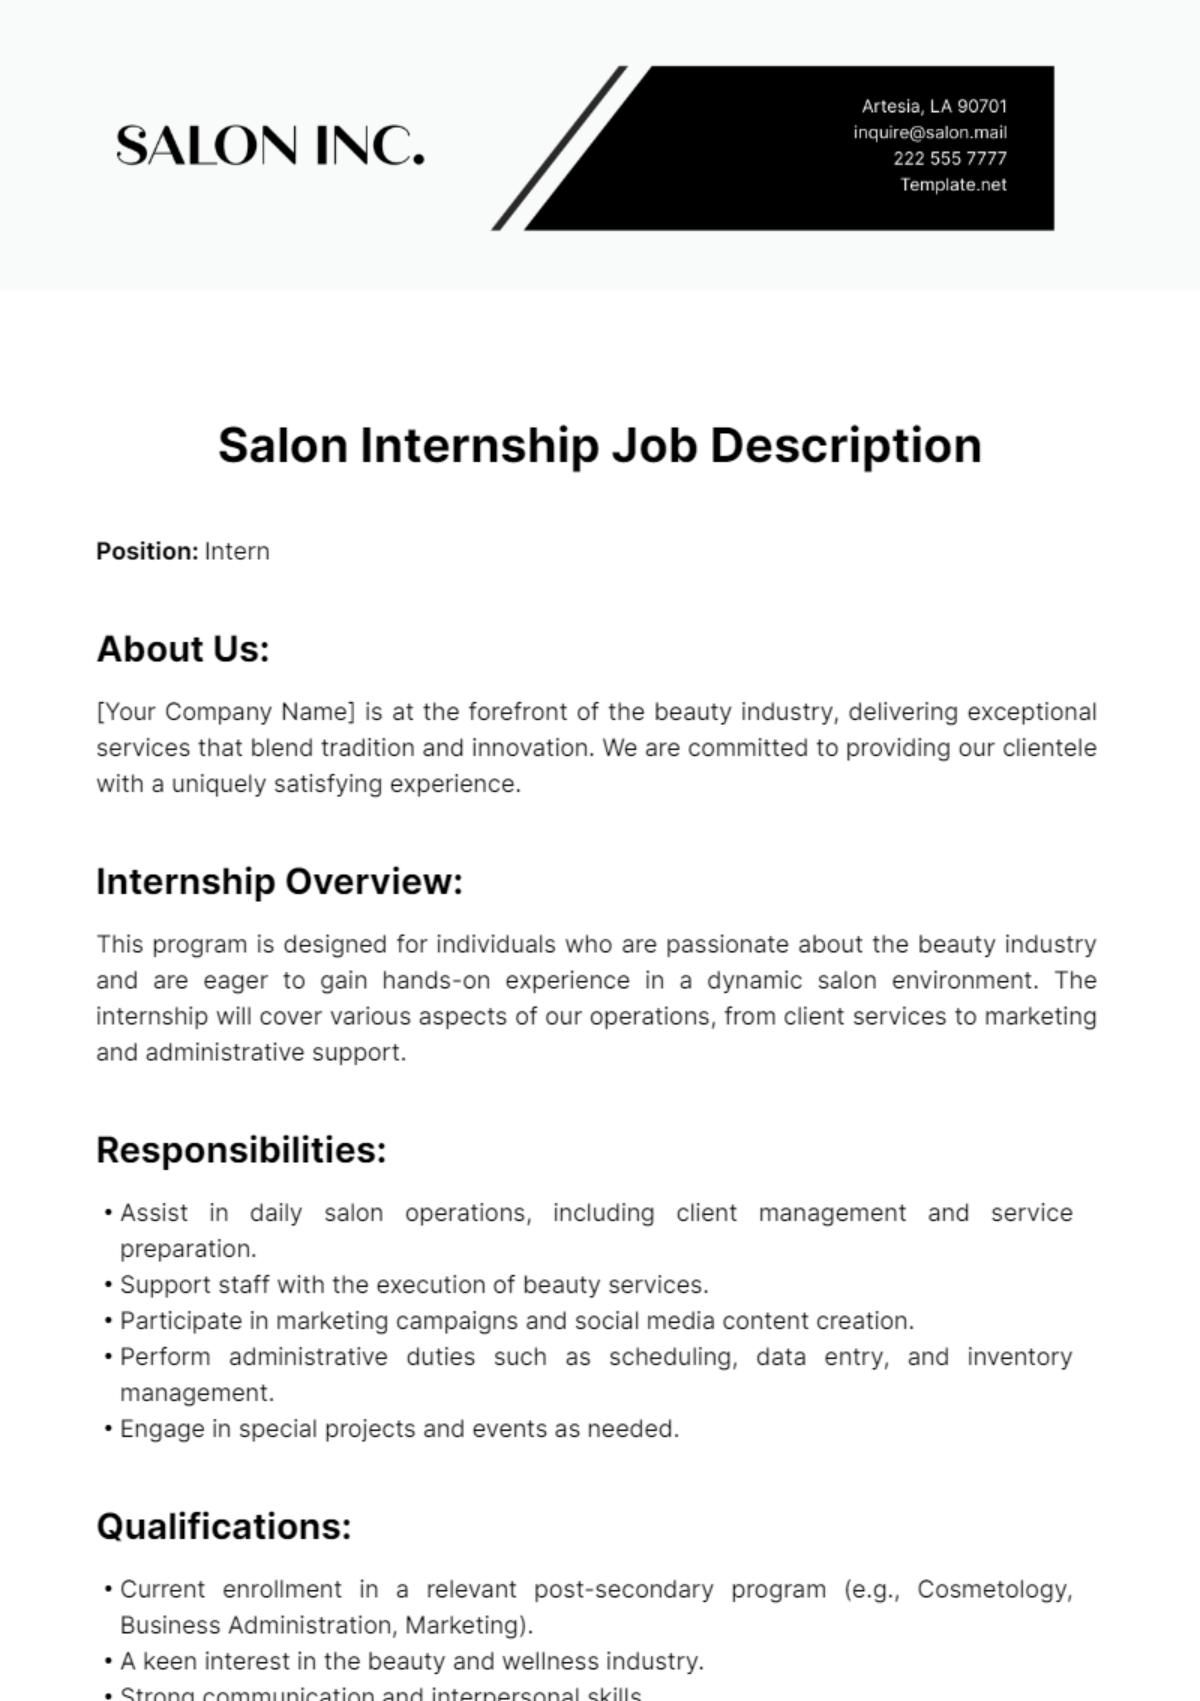 Free Salon Internship Job Description Template